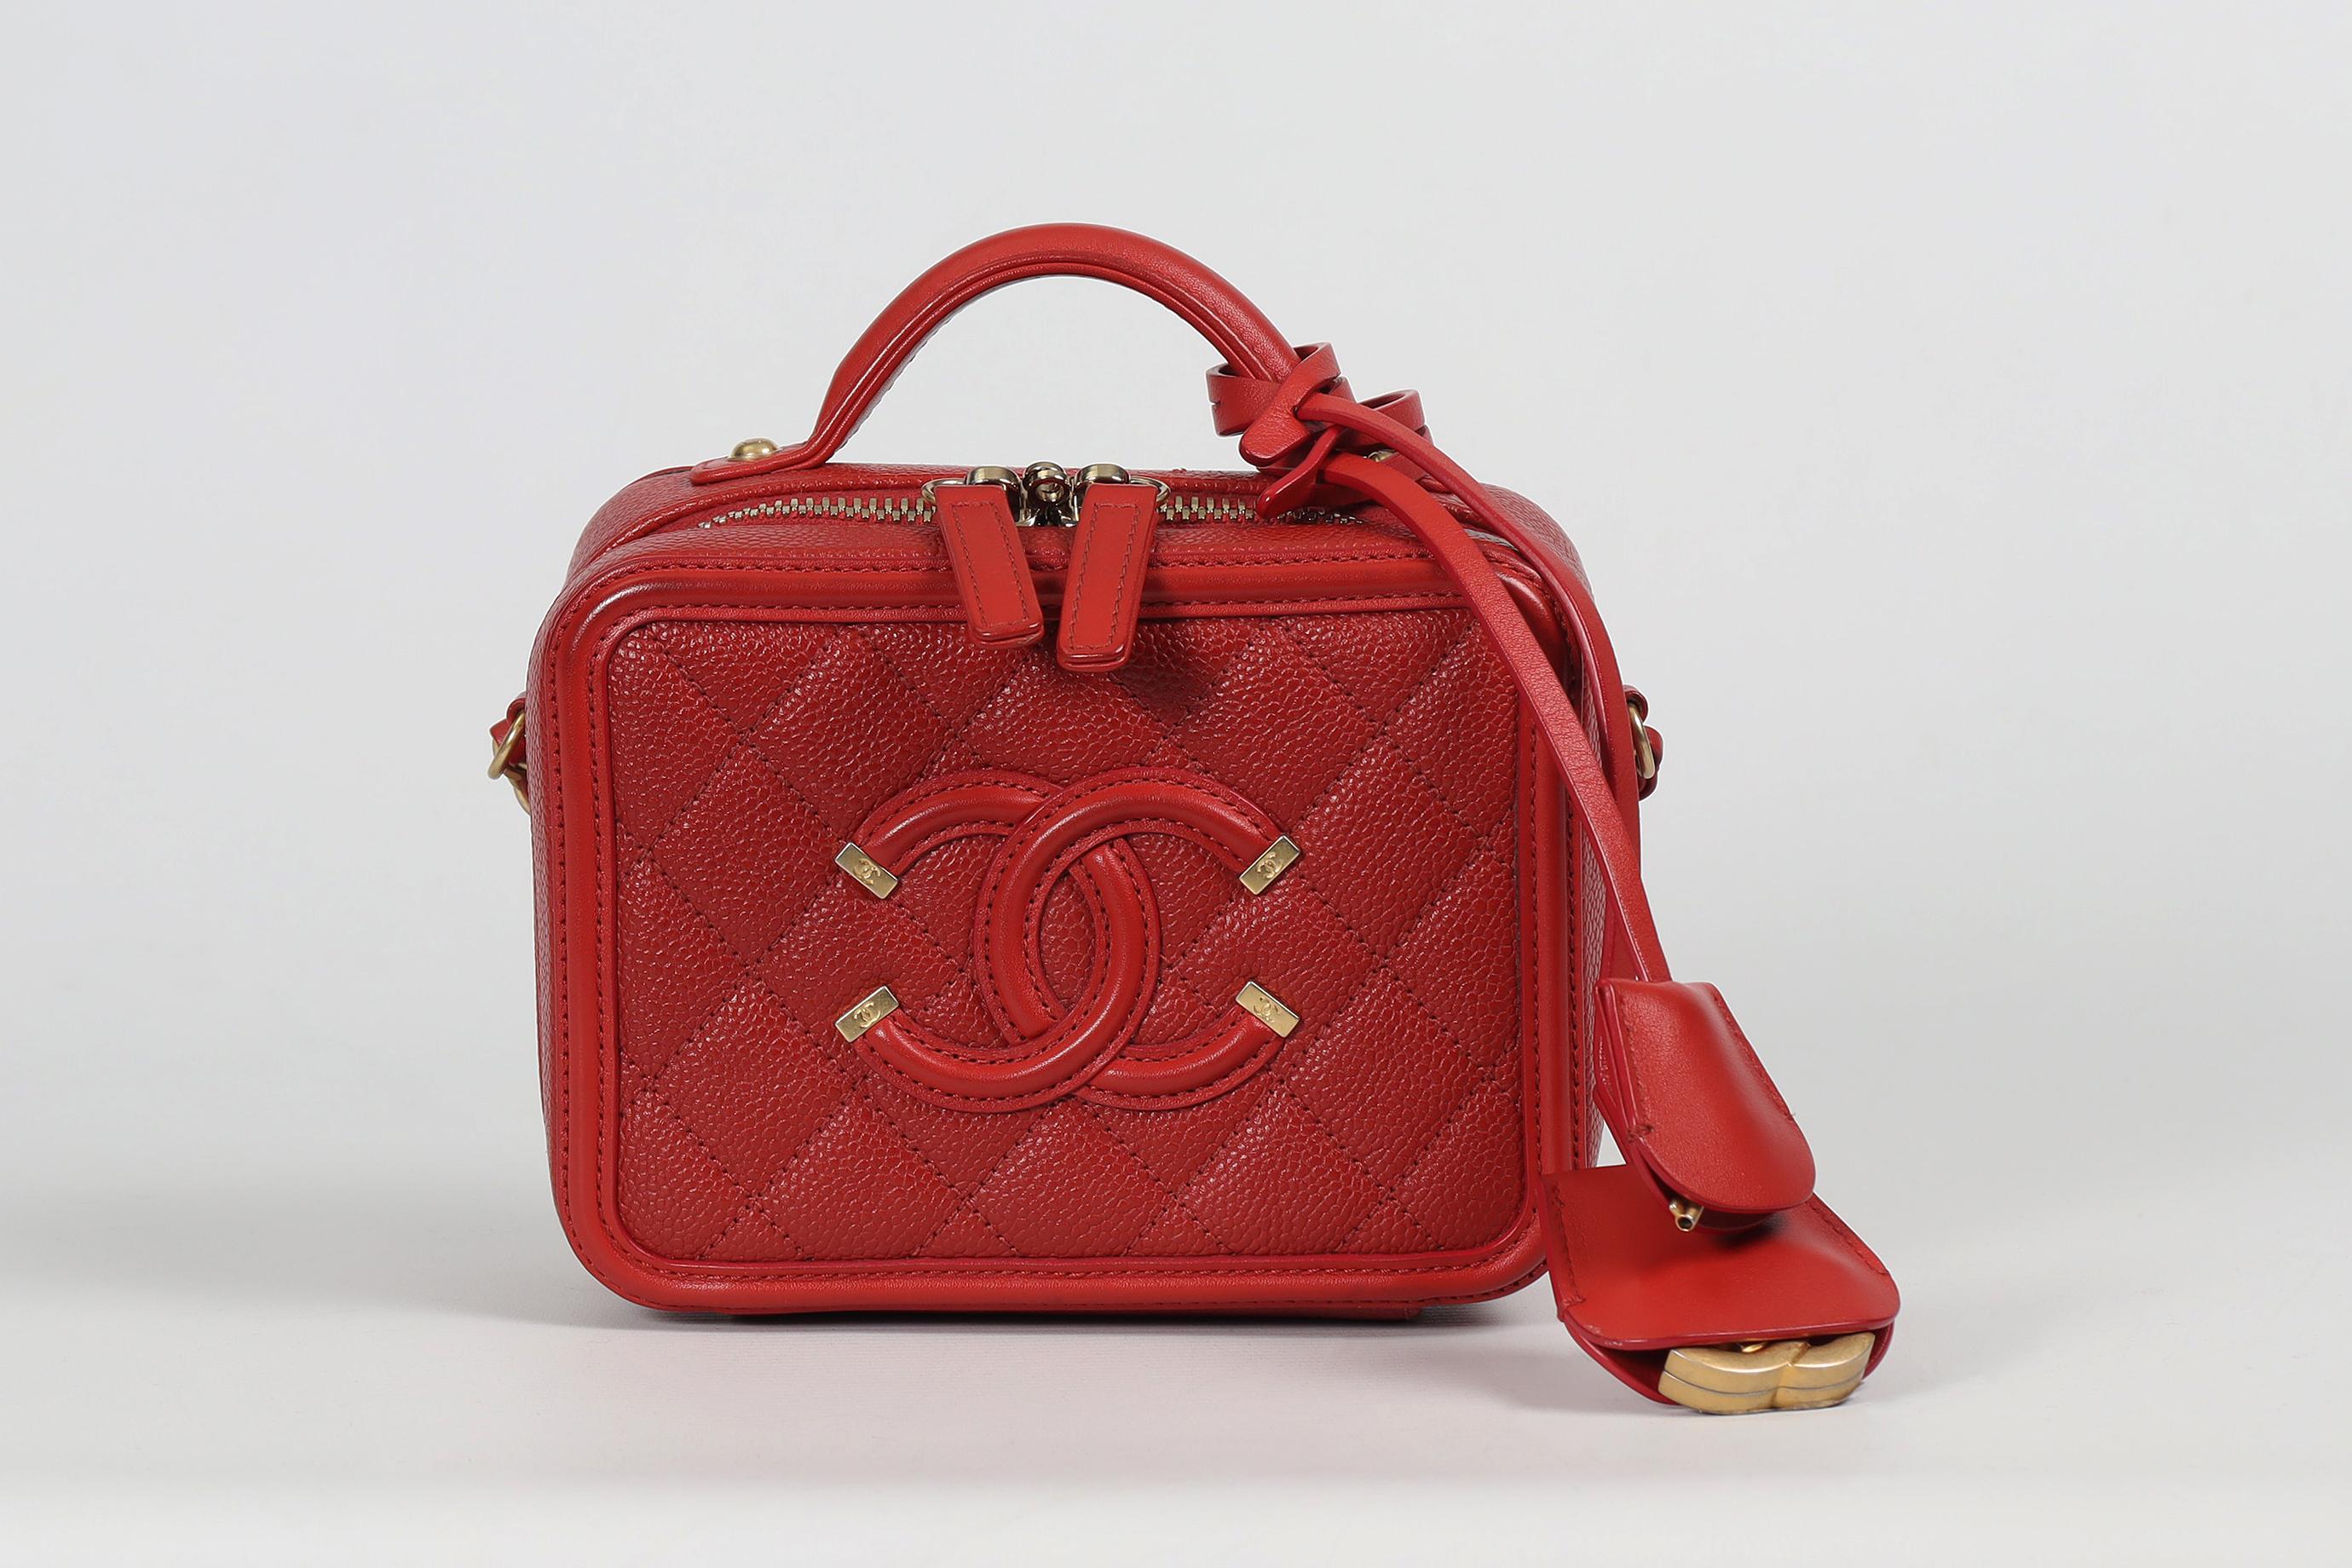 <ul>
<li>Chanel 2019 Vanity Case Small Quilted Caviar Leather Shoulder Bag.</li>
<li>Rot.</li>
<li>Reißverschluss - Oberteil.</li>
<li>Kommt mit - Staubbeutel und Echtheitskarte.</li>
<li><strong>Modell: Eitelkeit.</strong></li>
<li><strong>Höhe: